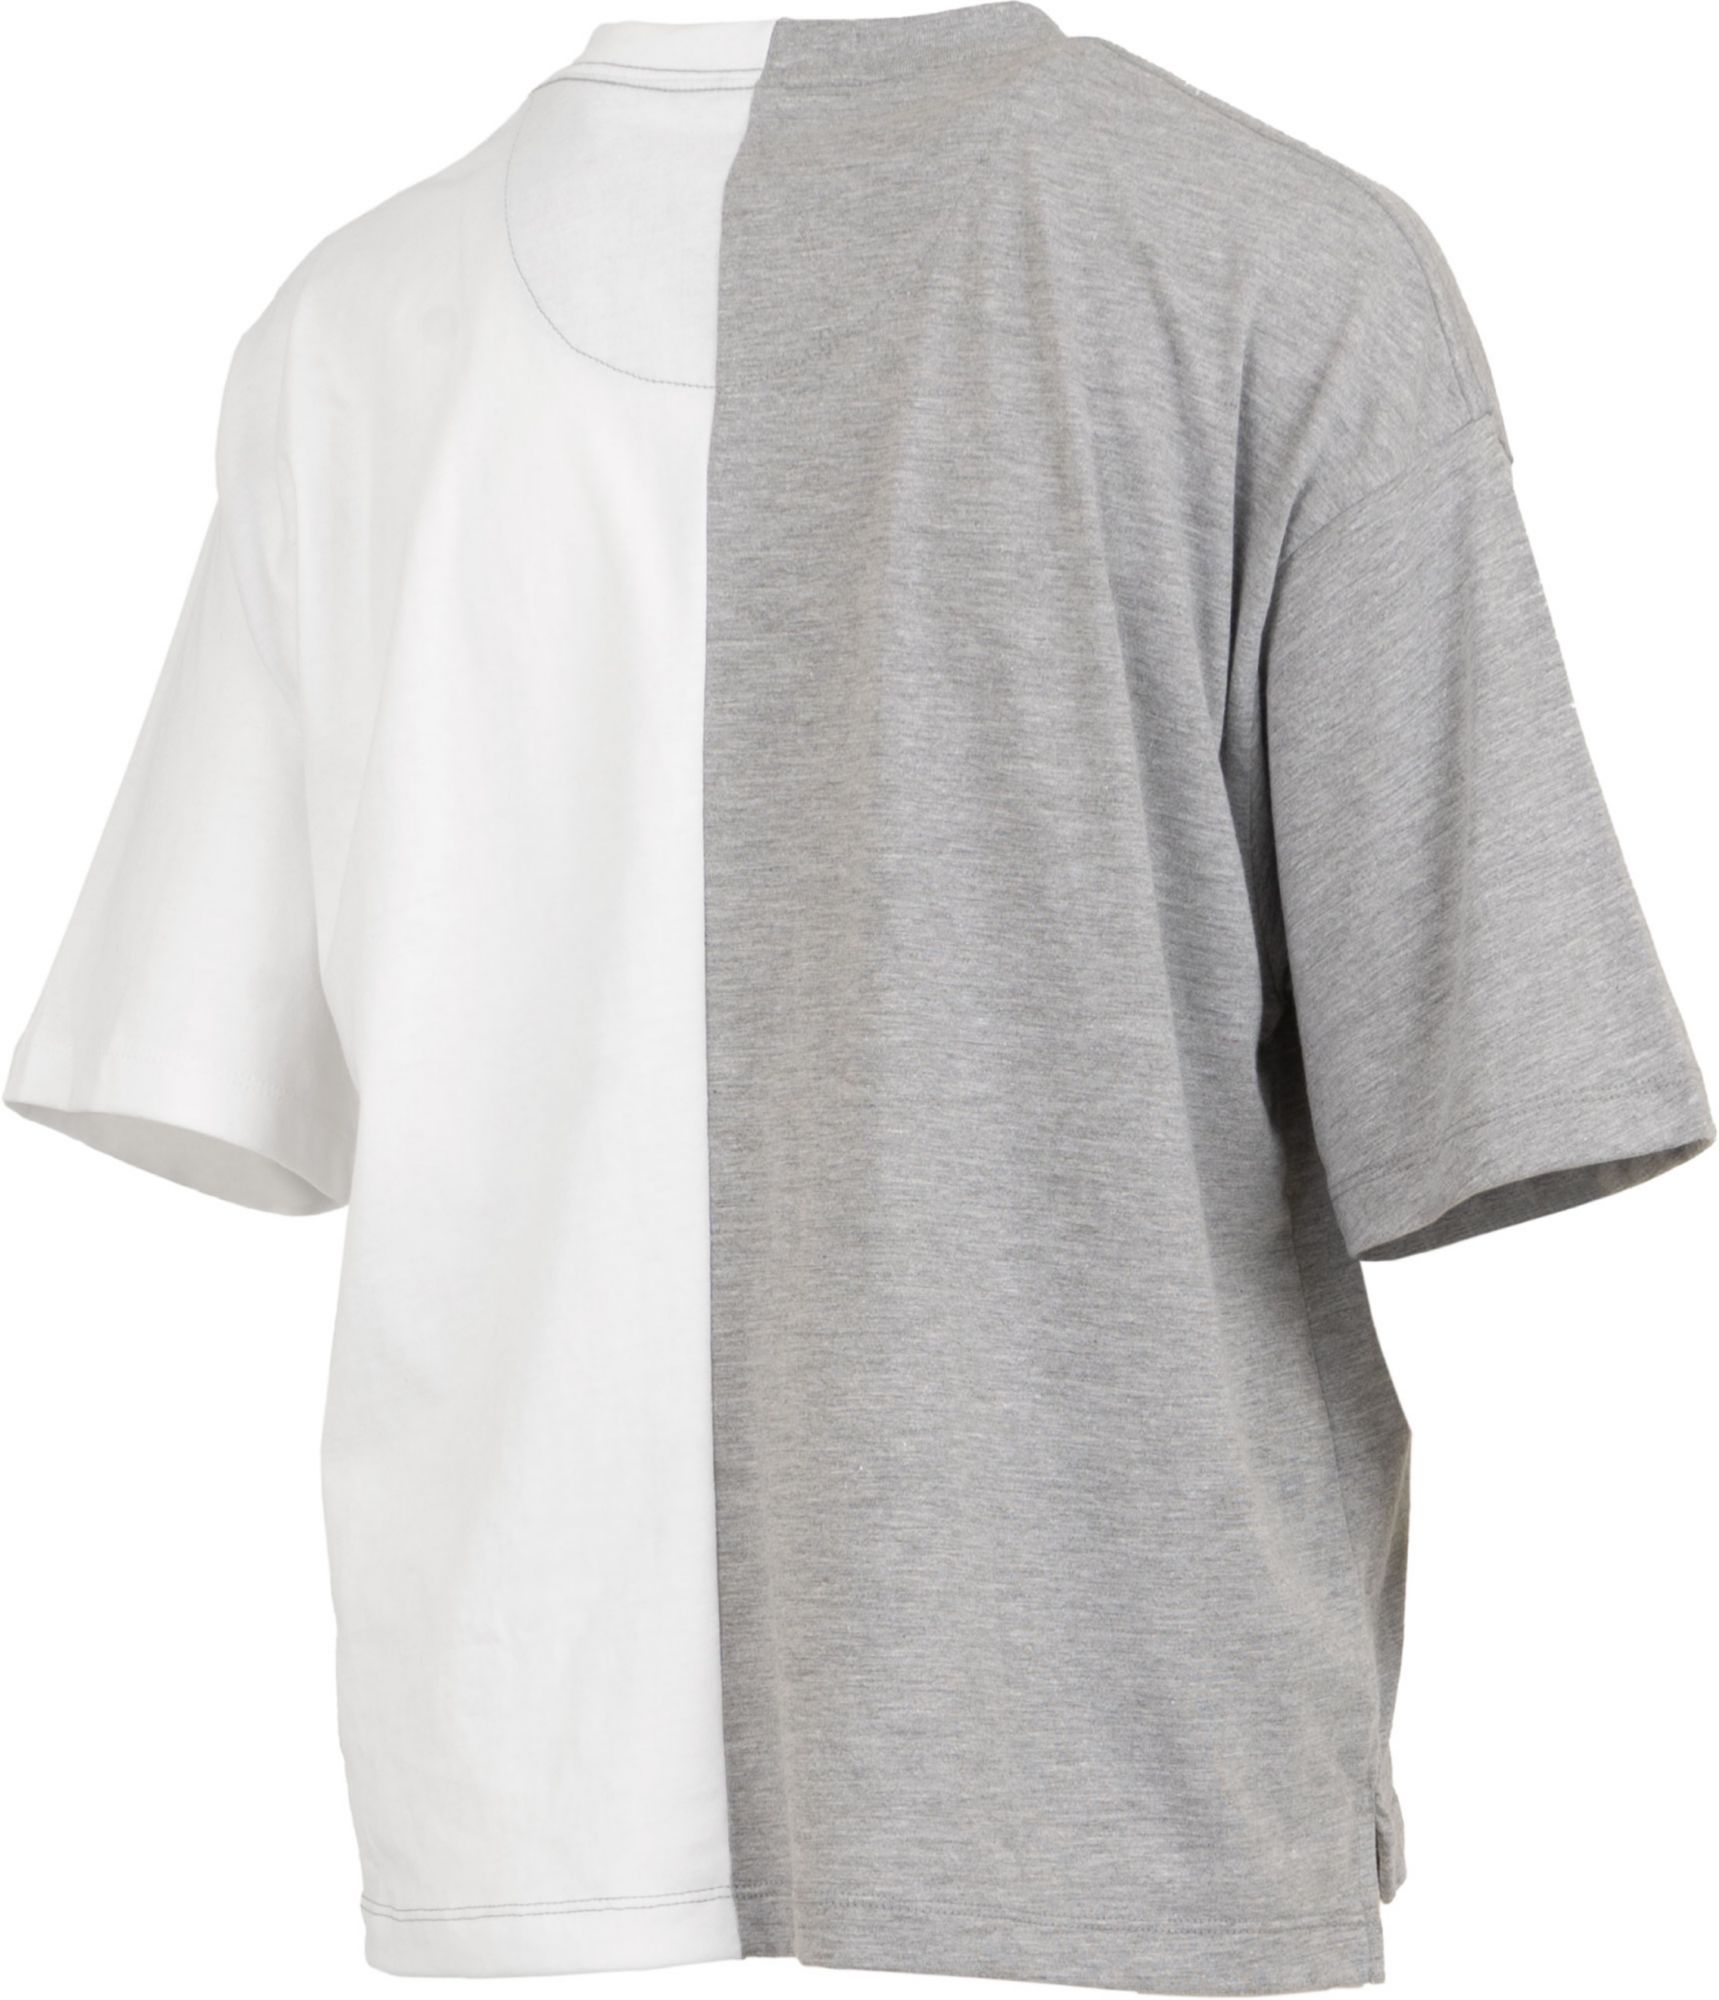 Pressbox Women's NC State Wolfpack Grey & White Half and Half T-Shirt